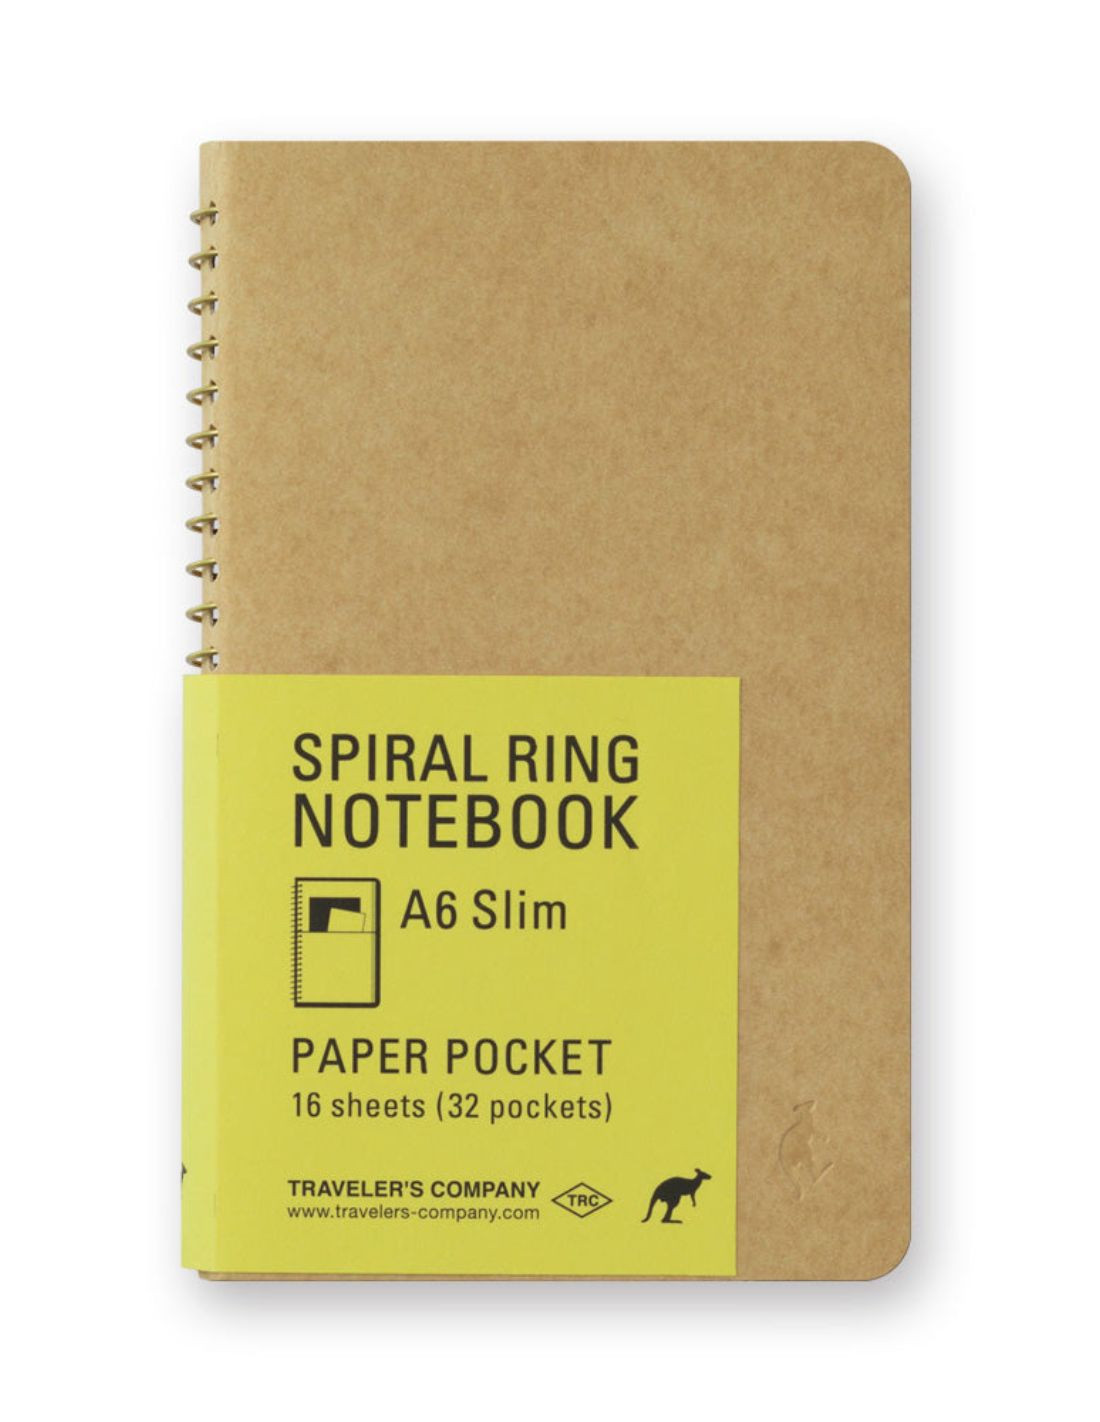 A6 Slim Paper Pocket - Spiral Ring Notebook - Traveler's Company